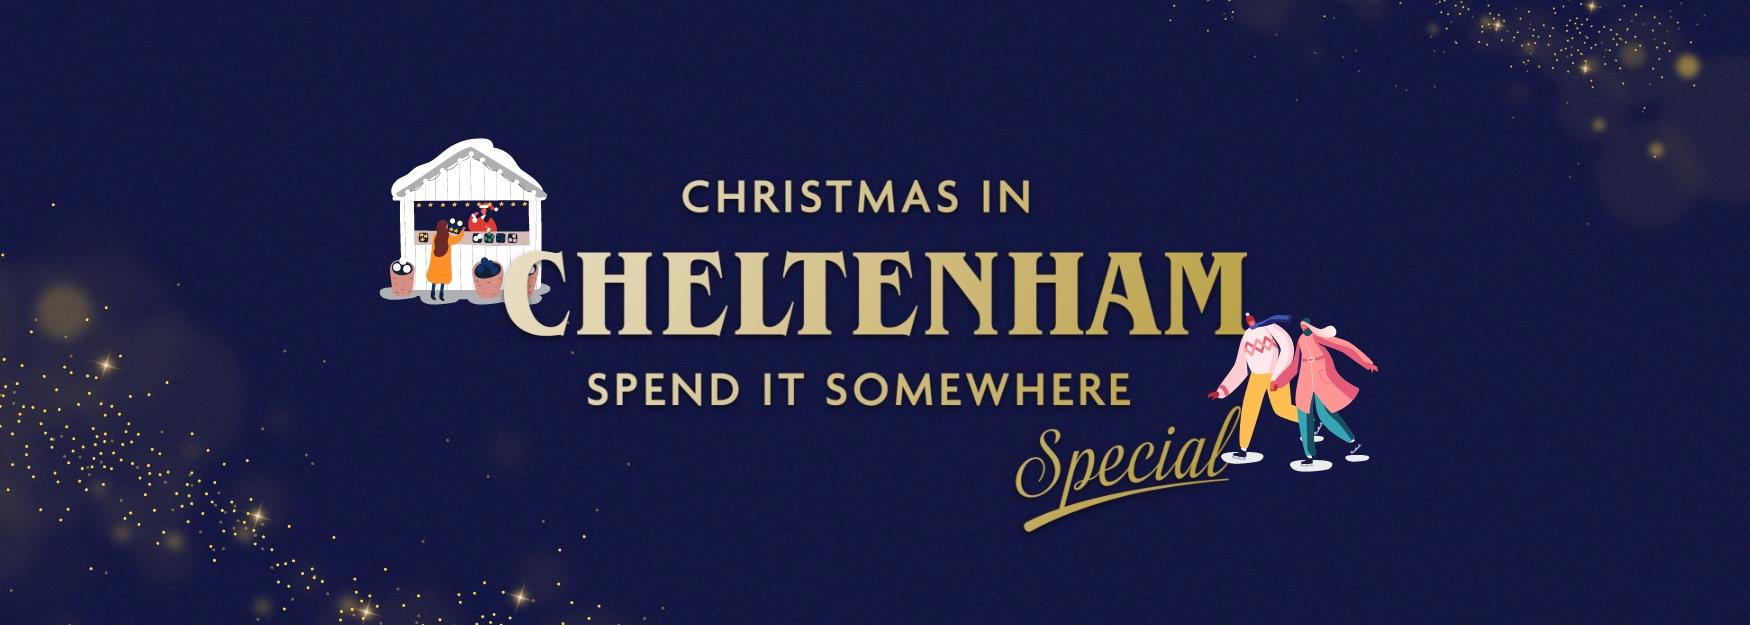 Christmas events Cheltenham 2021